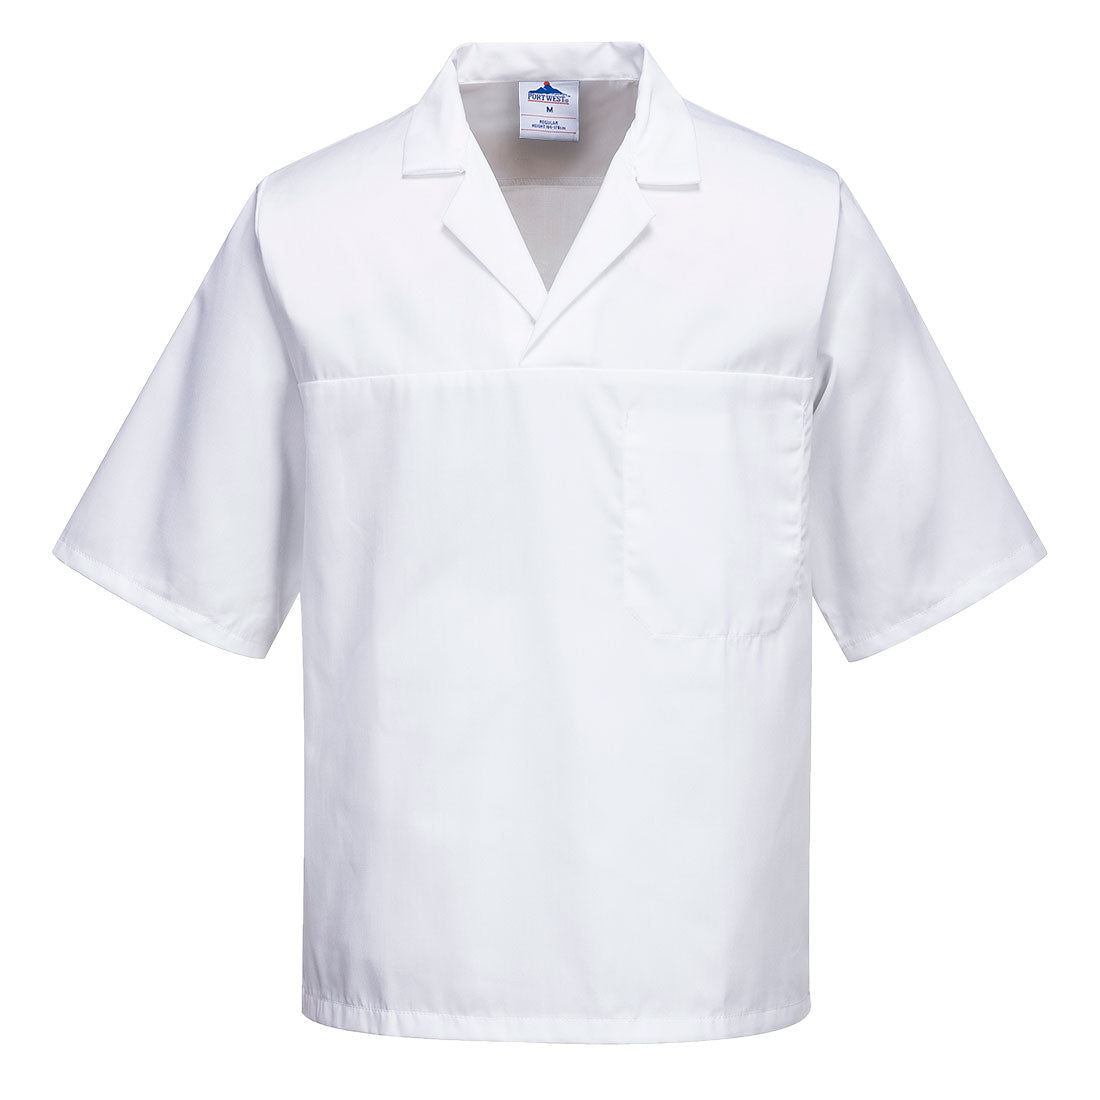 Portwest 2209 - White Food Industry Short Sleeve Baker Shirt sz XSmall Regular